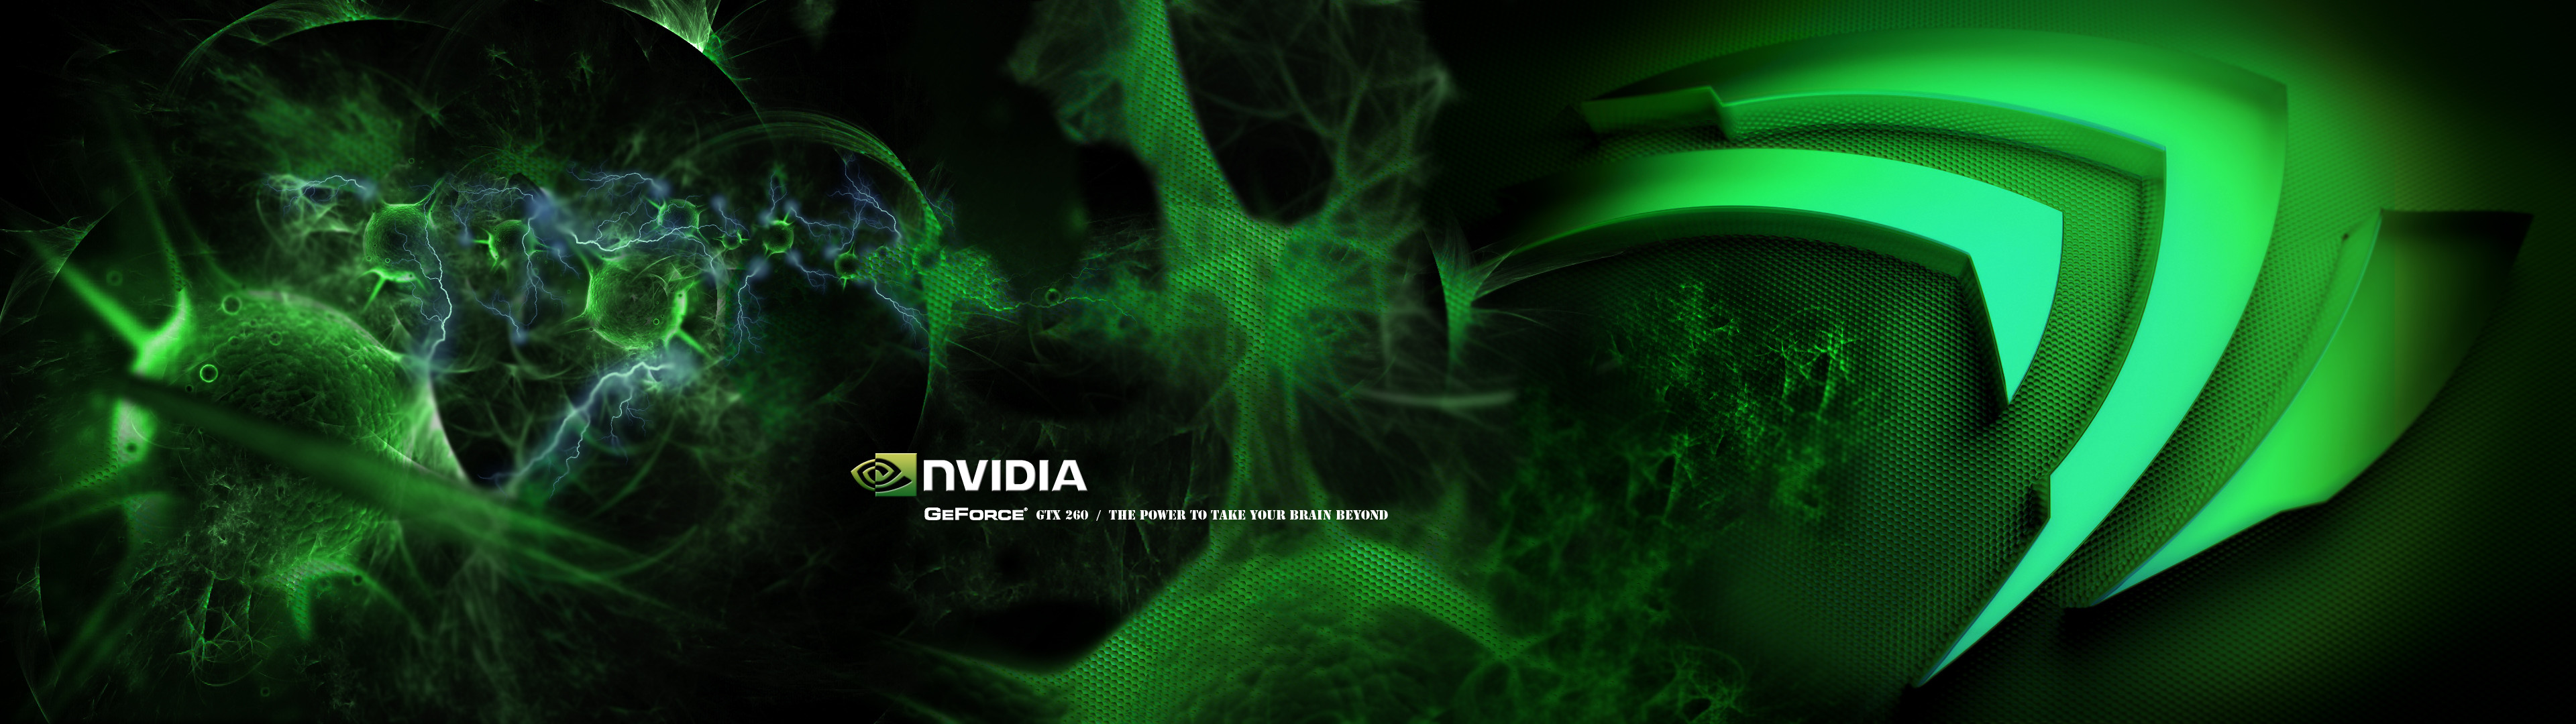 3840x1080 Nvidia Dual Monitor Wallpaper by verdessoto on DeviantArt